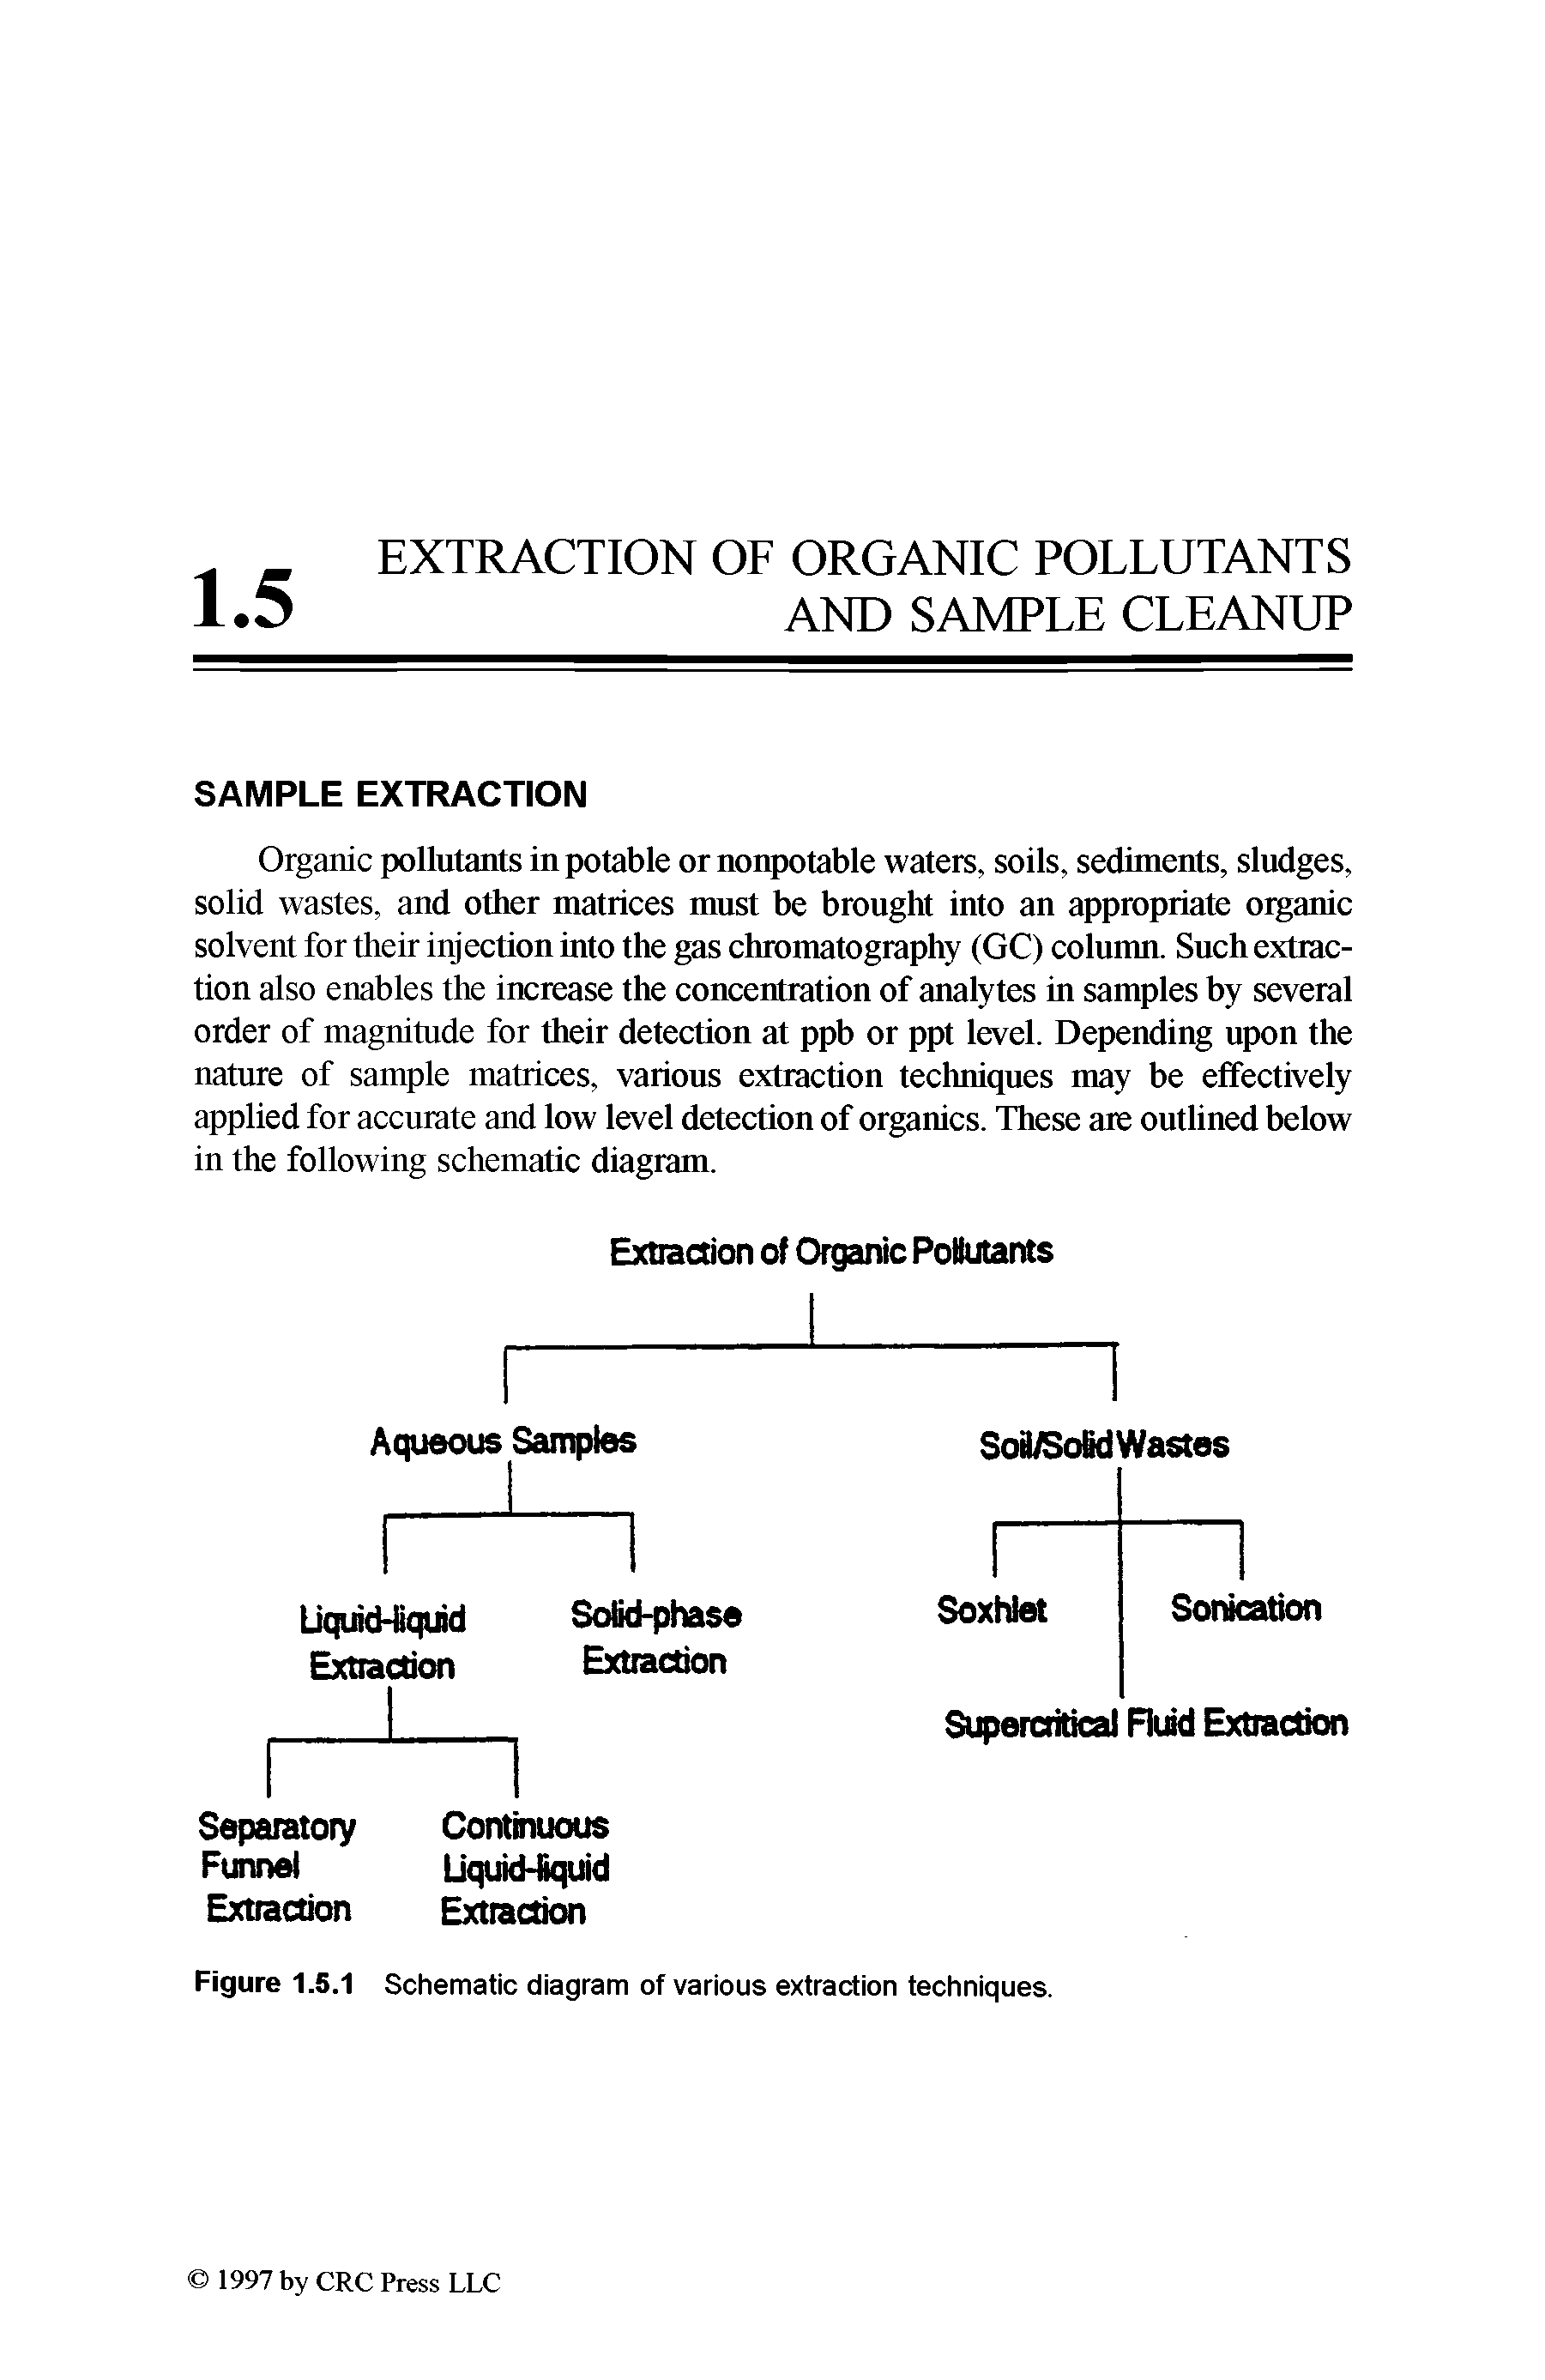 Figure 1.5.1 Schematic diagram of various extraction techniques.